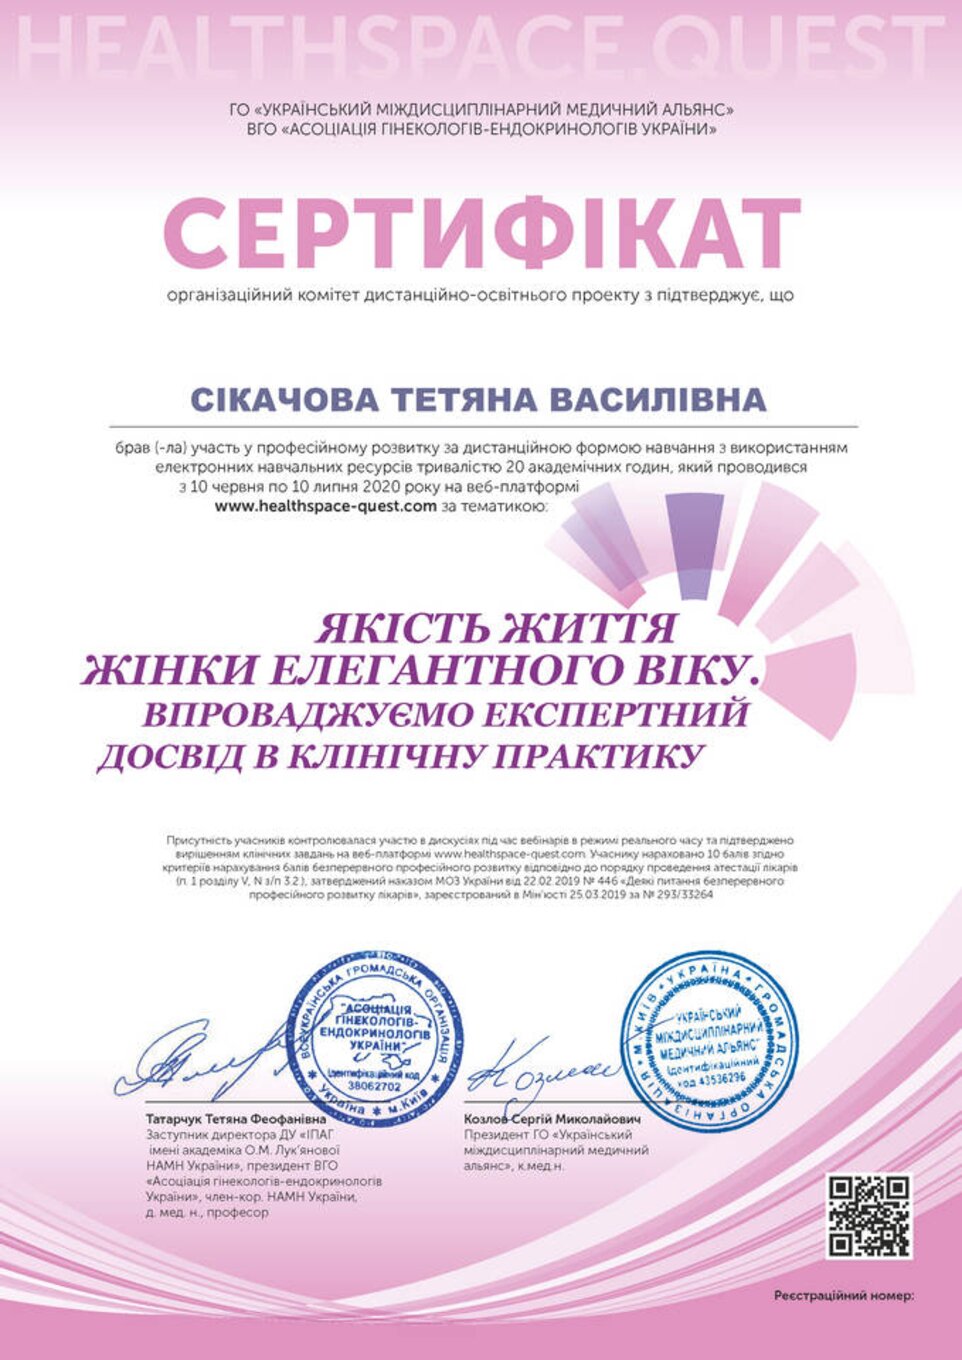 certificates/cikachova-tetyana-vasilivna/erc-sikacheva-cert-31.jpg